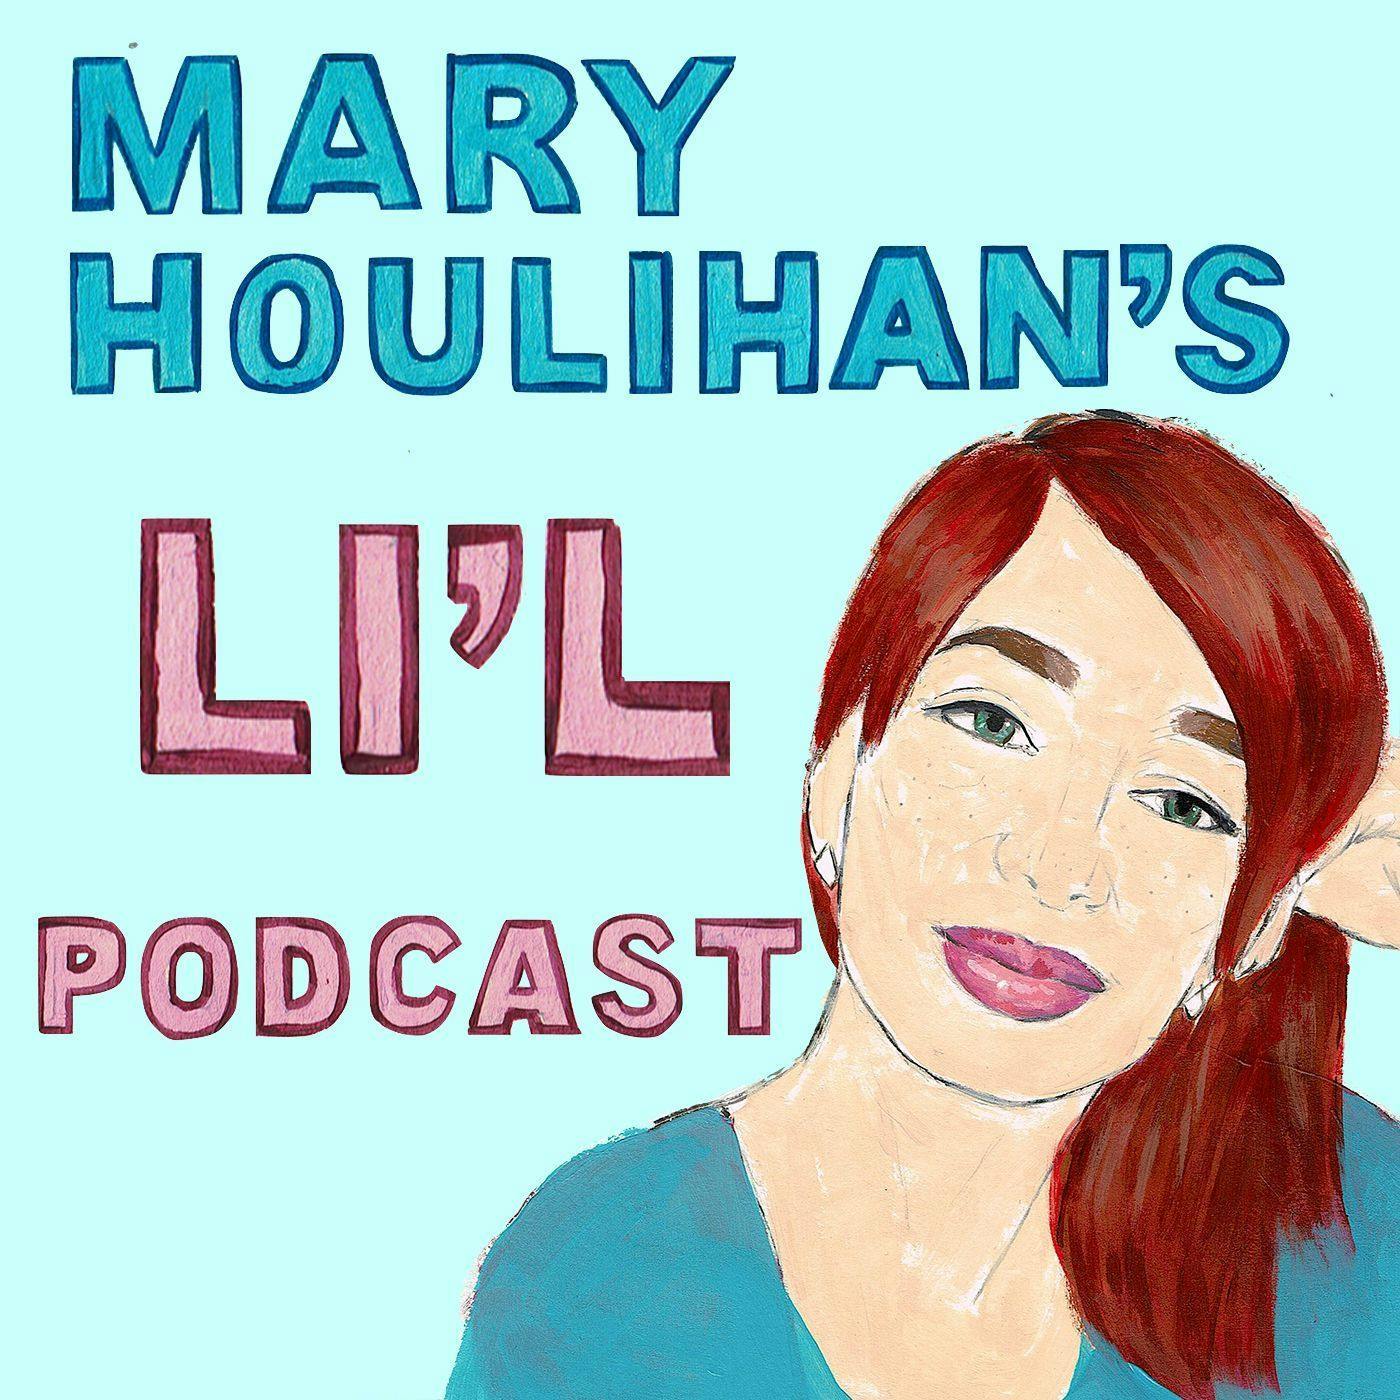 The Big Podcast Audition! (w/ Sally Burtnick)